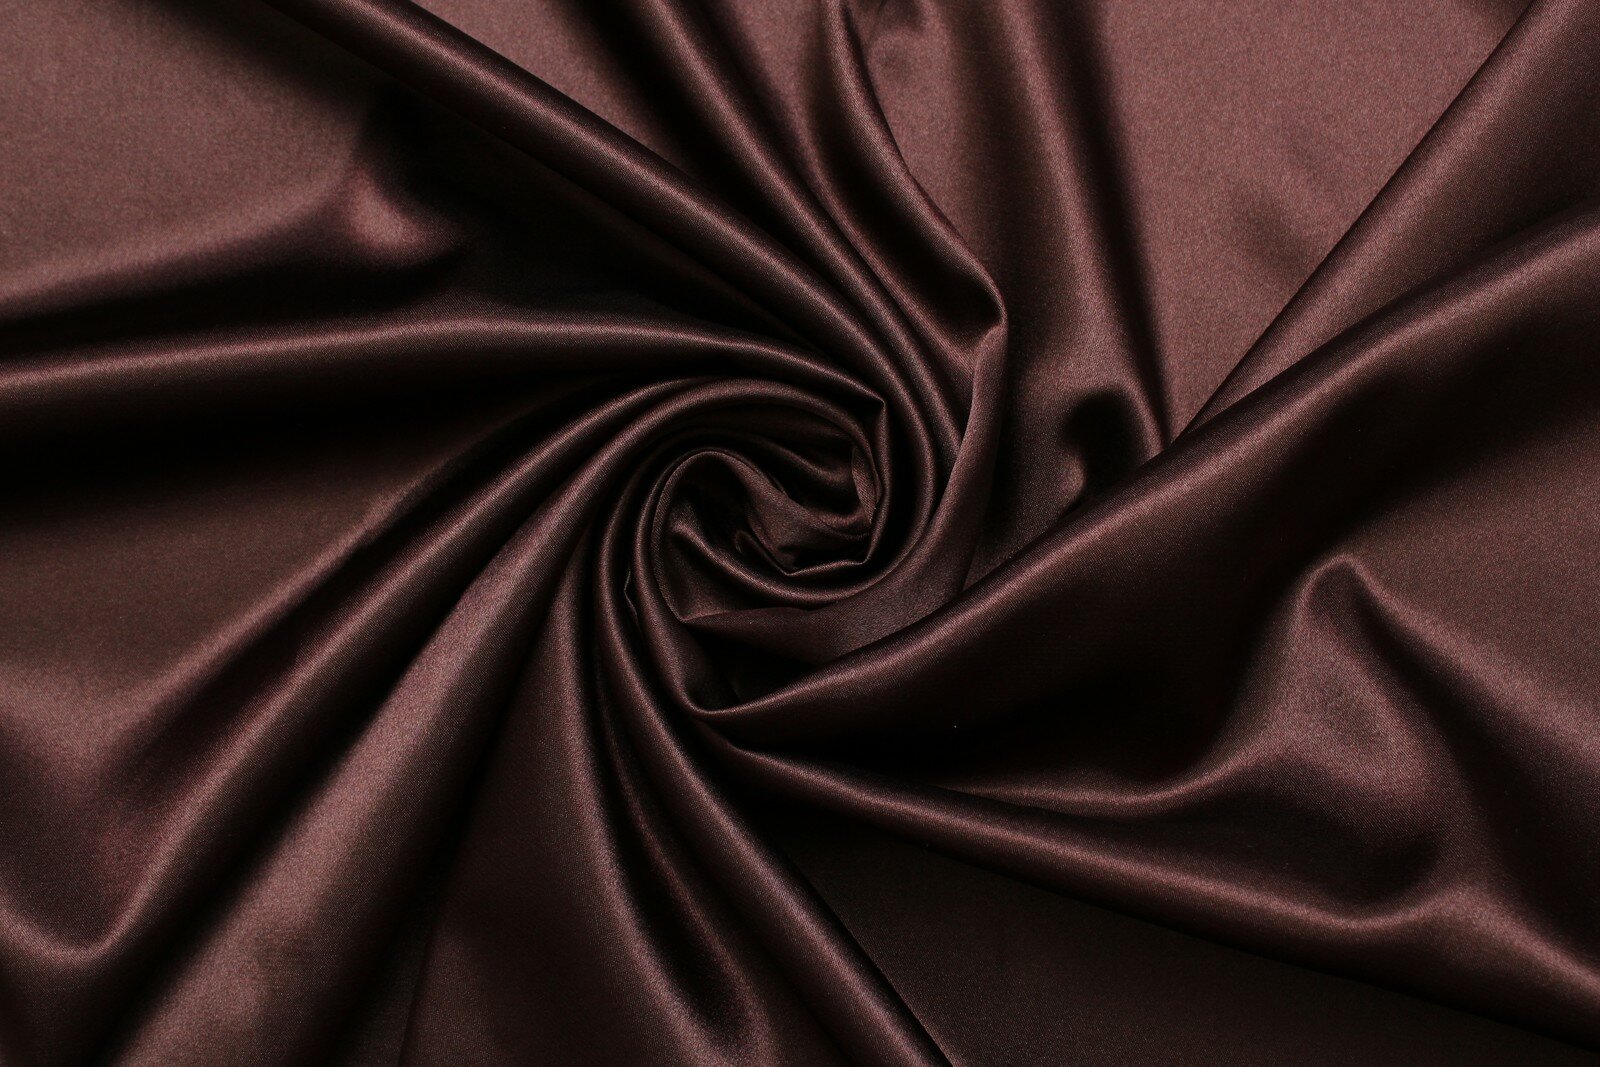 Ткань Атлас-стрейч шоколадного цвета, ш145см, 0,5 м